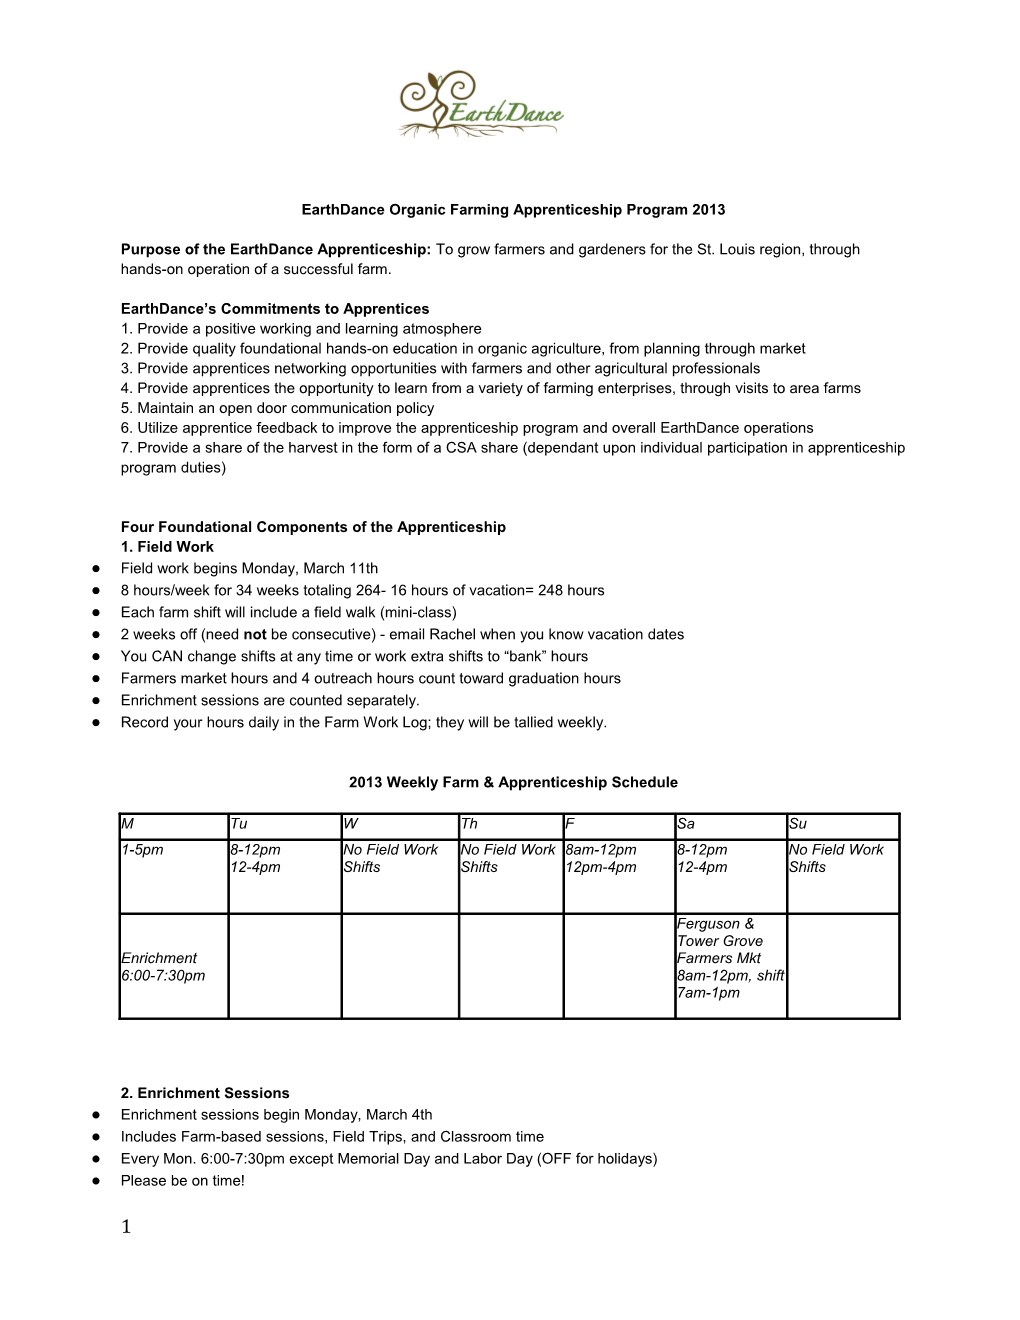 APP 2013 Apprentiship Orientation Handout